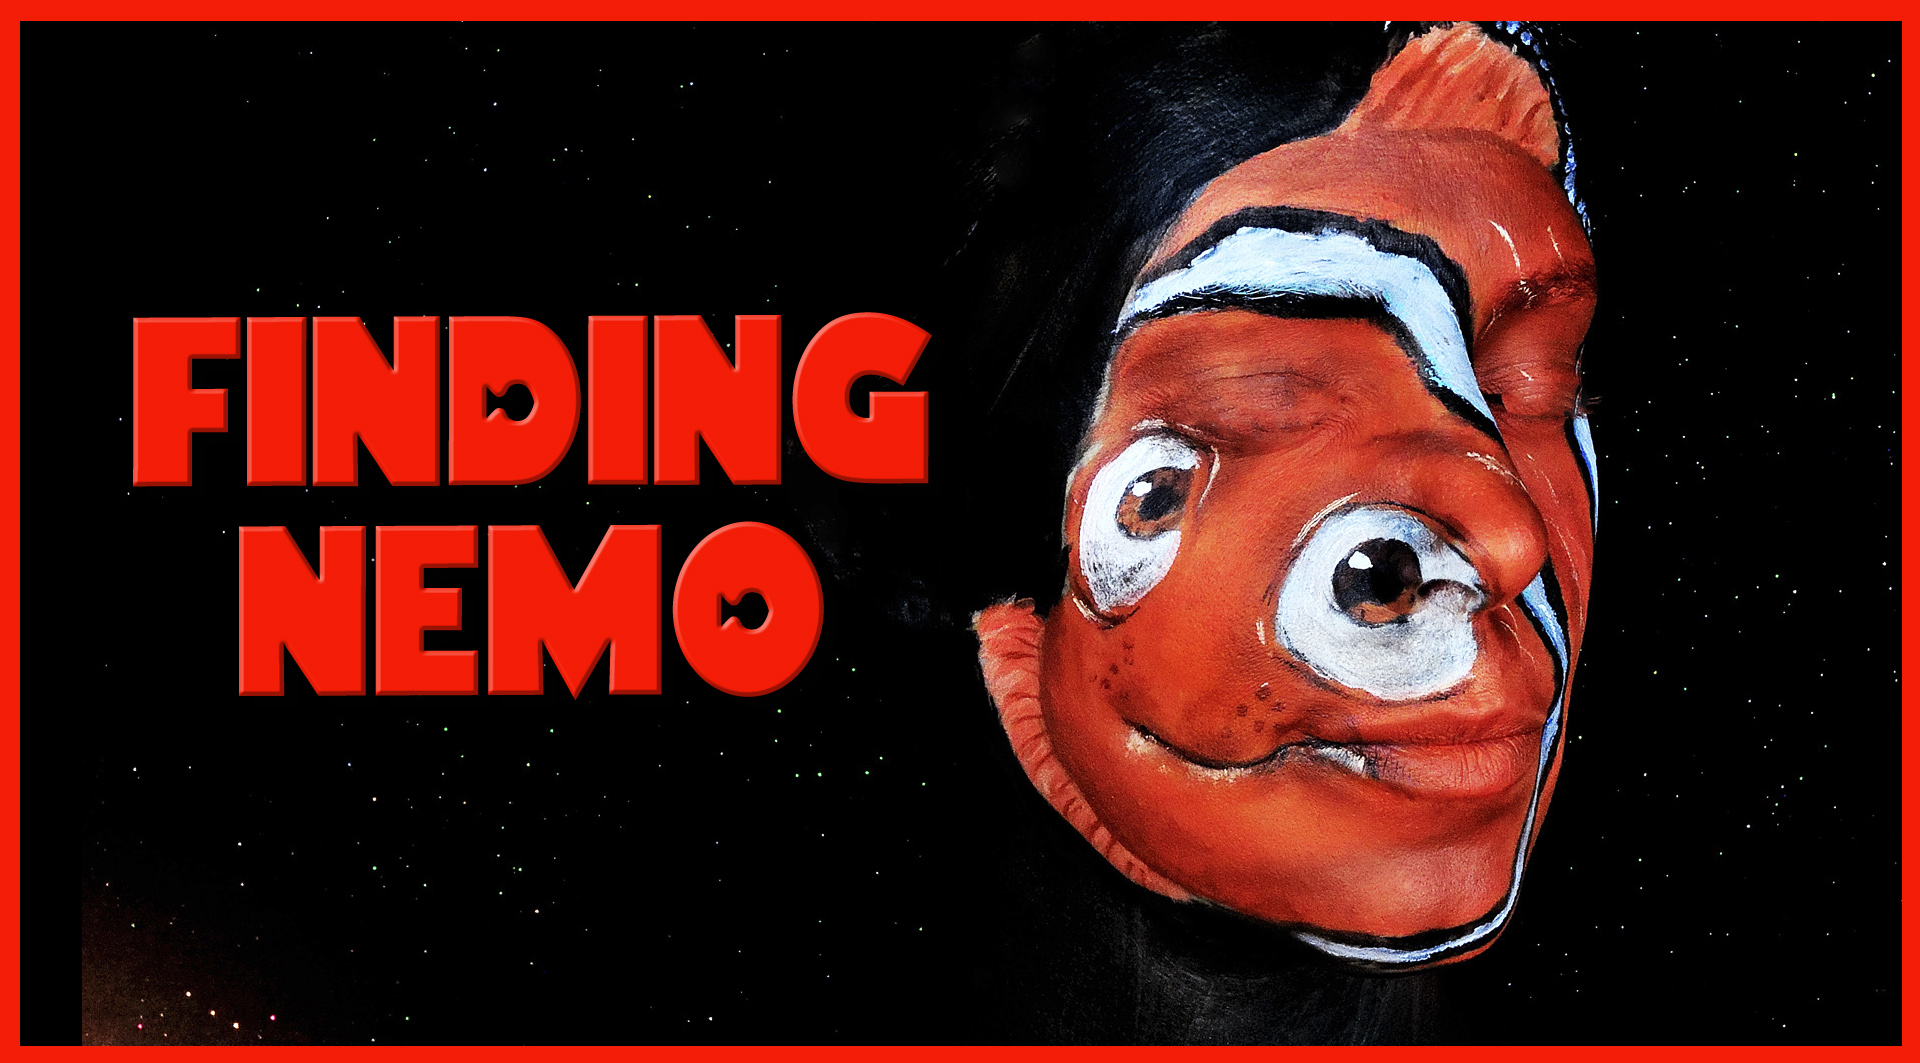 Nemo from Finding Nemo makeup tutorial